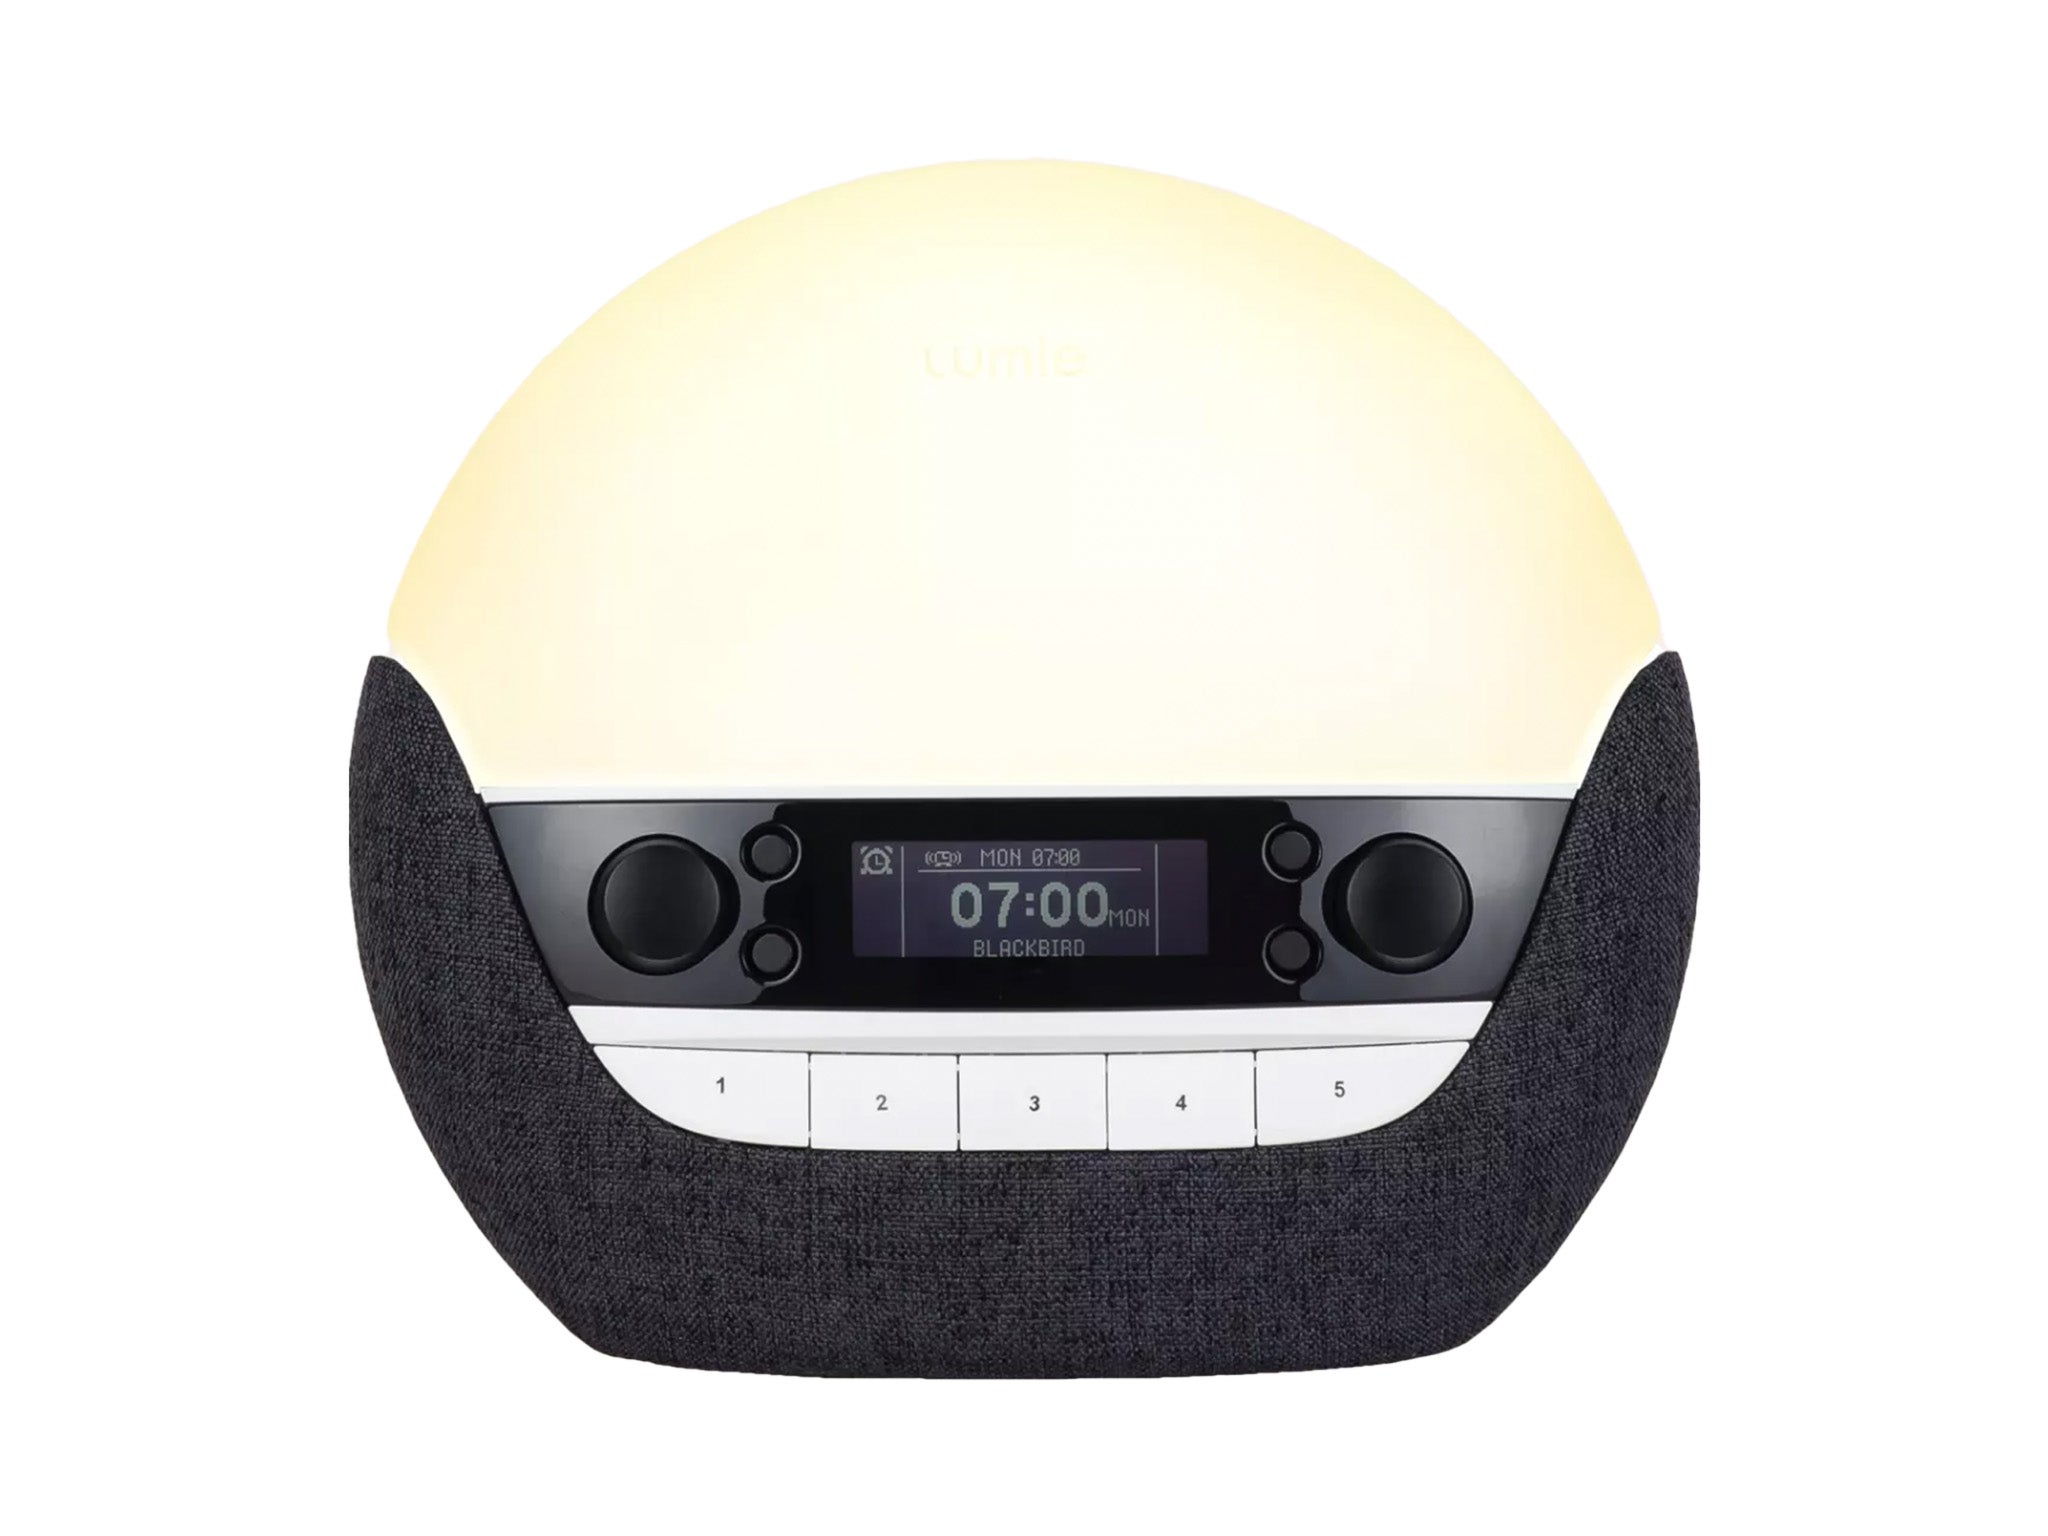 Lumie bodyclock luxe 750DAB wake-up light alarm clock indybest